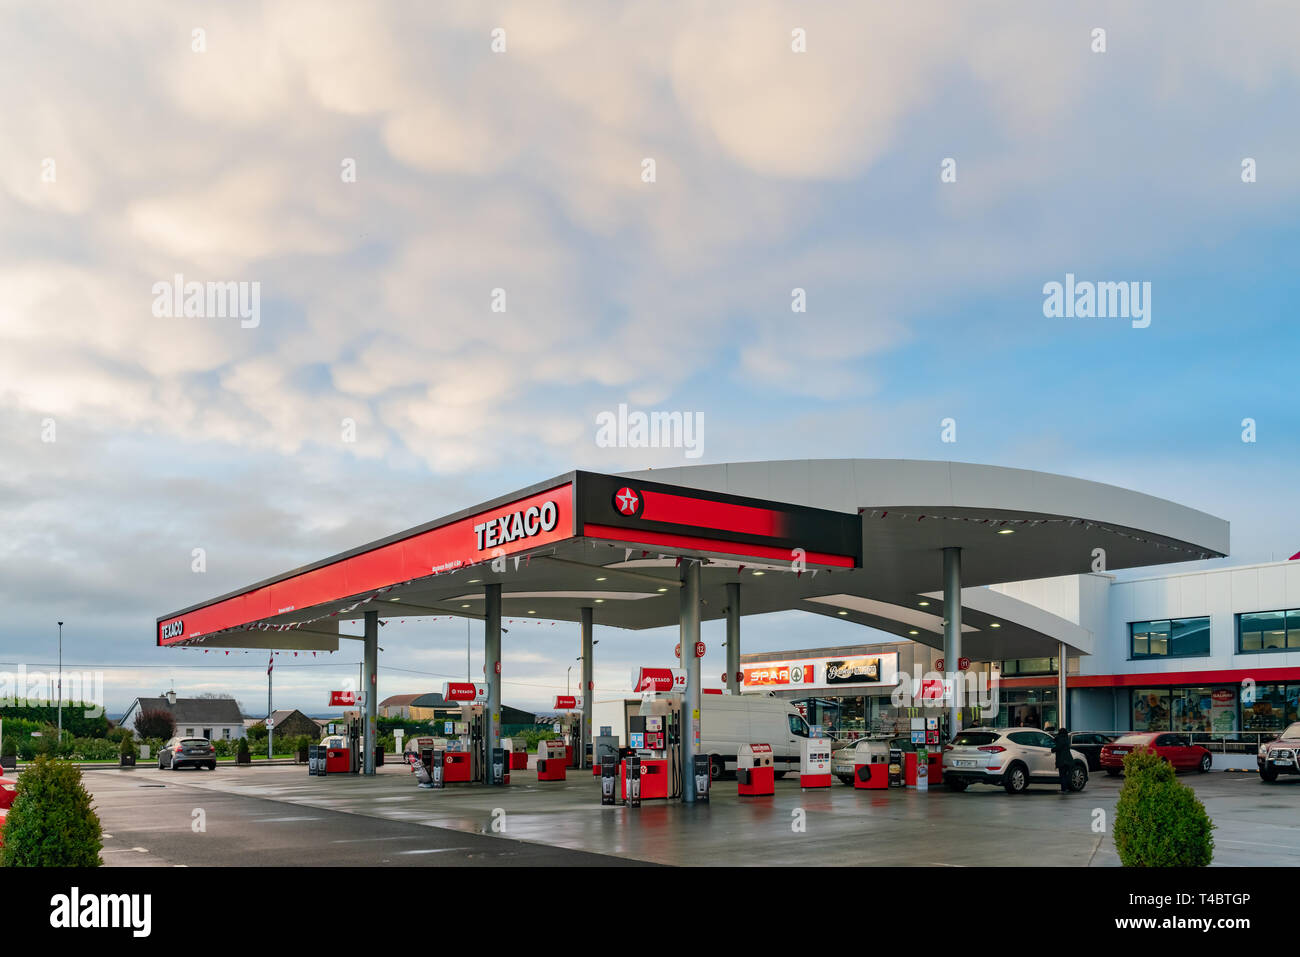 Dublin, OCT 27: Exterior view of a Texaco gas station on OCT 27, 2018 at Dublin, Ireland Stock Photo